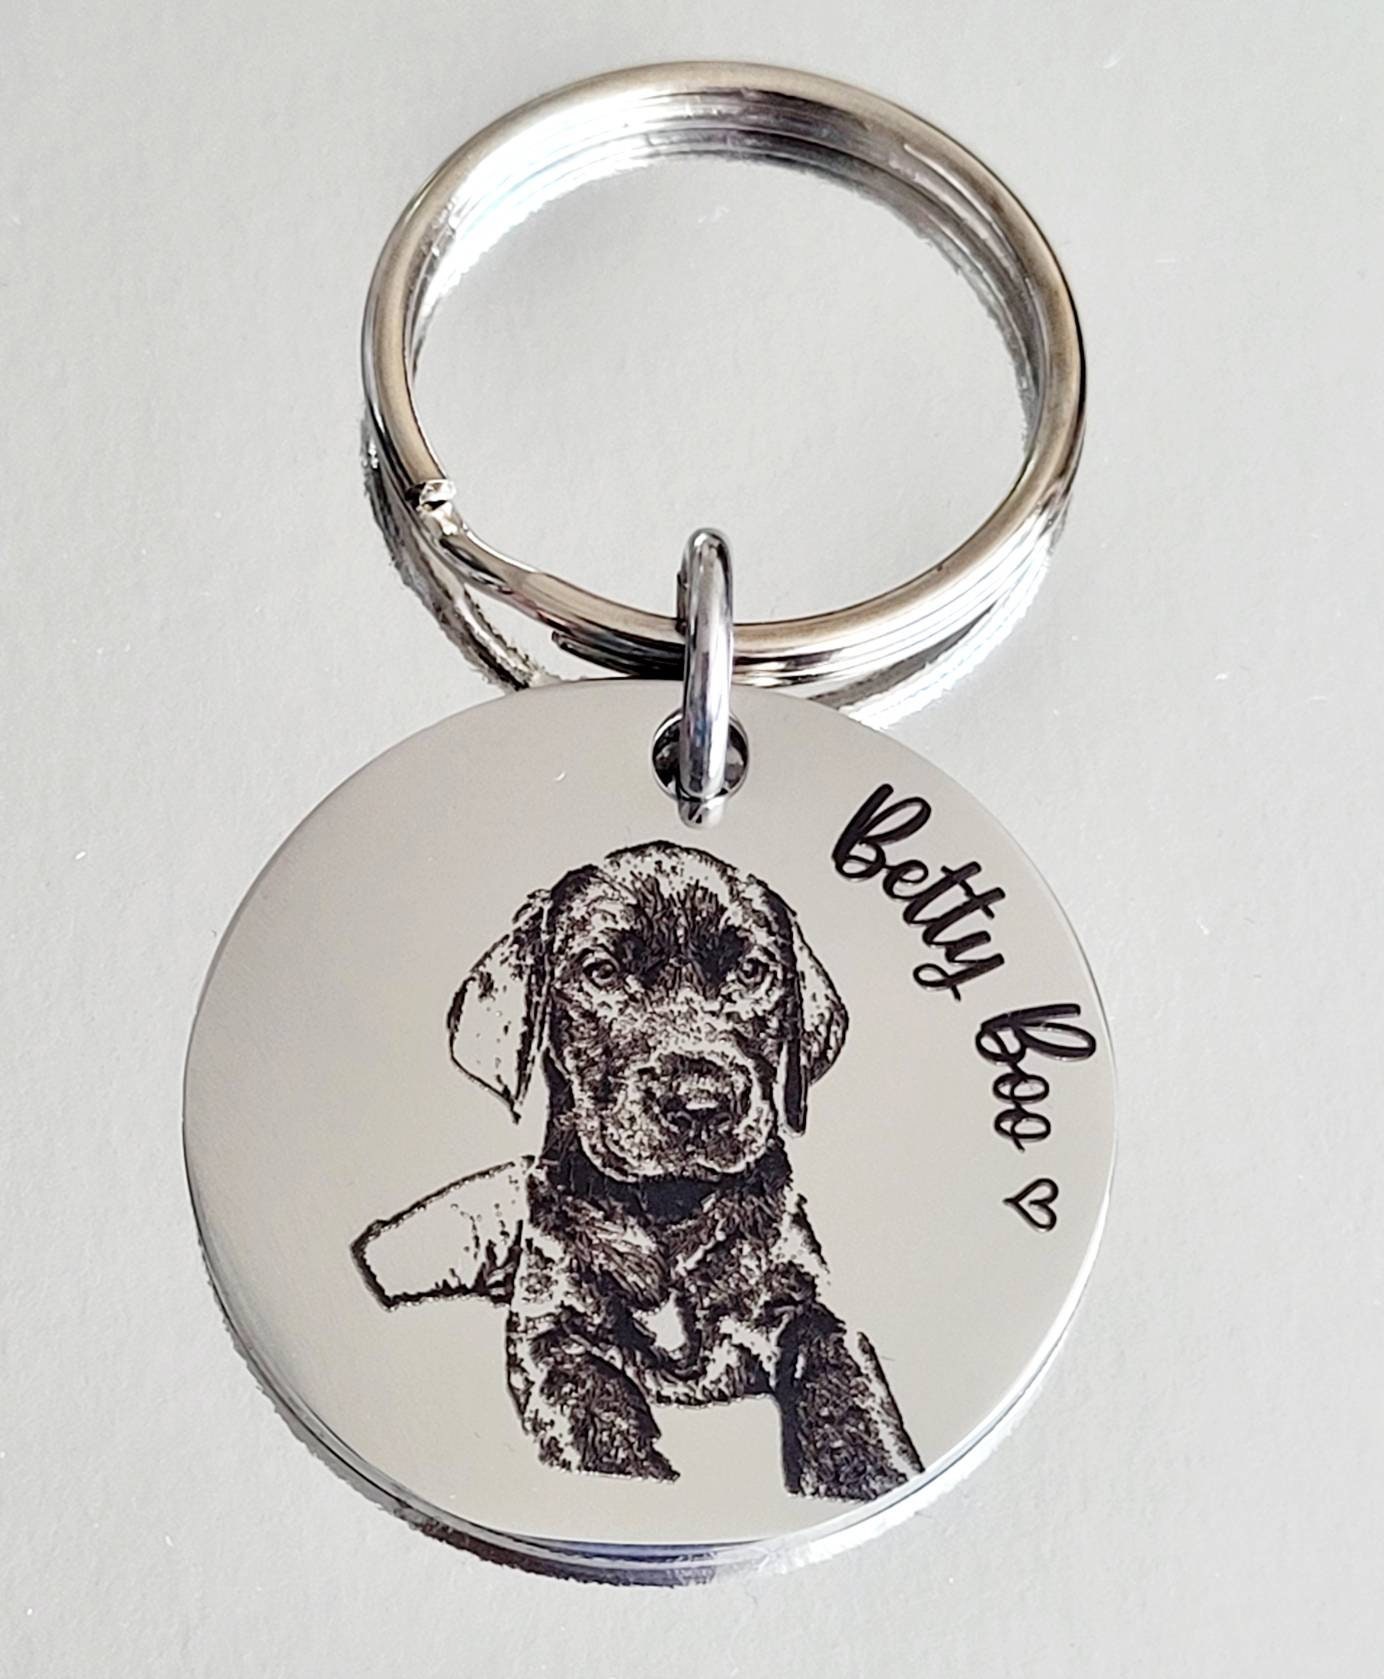 Dog Keychain Dog Basket Key Chains, Keychain Rings Best Friend, Dog Paw  Print Keychain, Gift for Dog Lover S2S0 